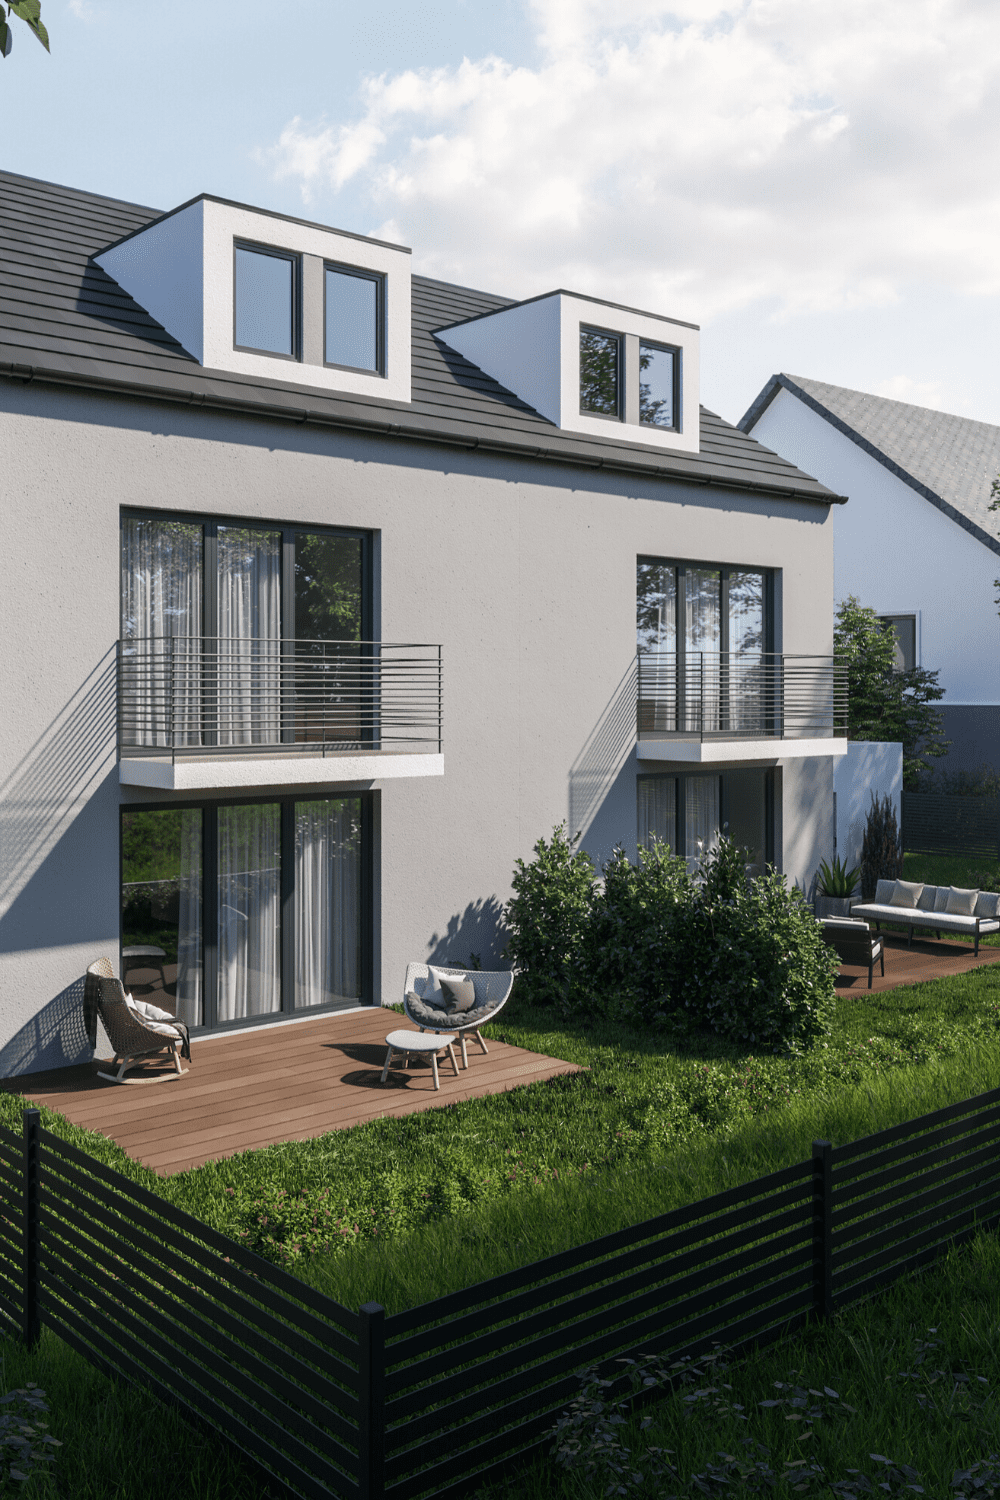 Architectural visualization of a home and beautiful garden in Kelkheim-Ruppertshain